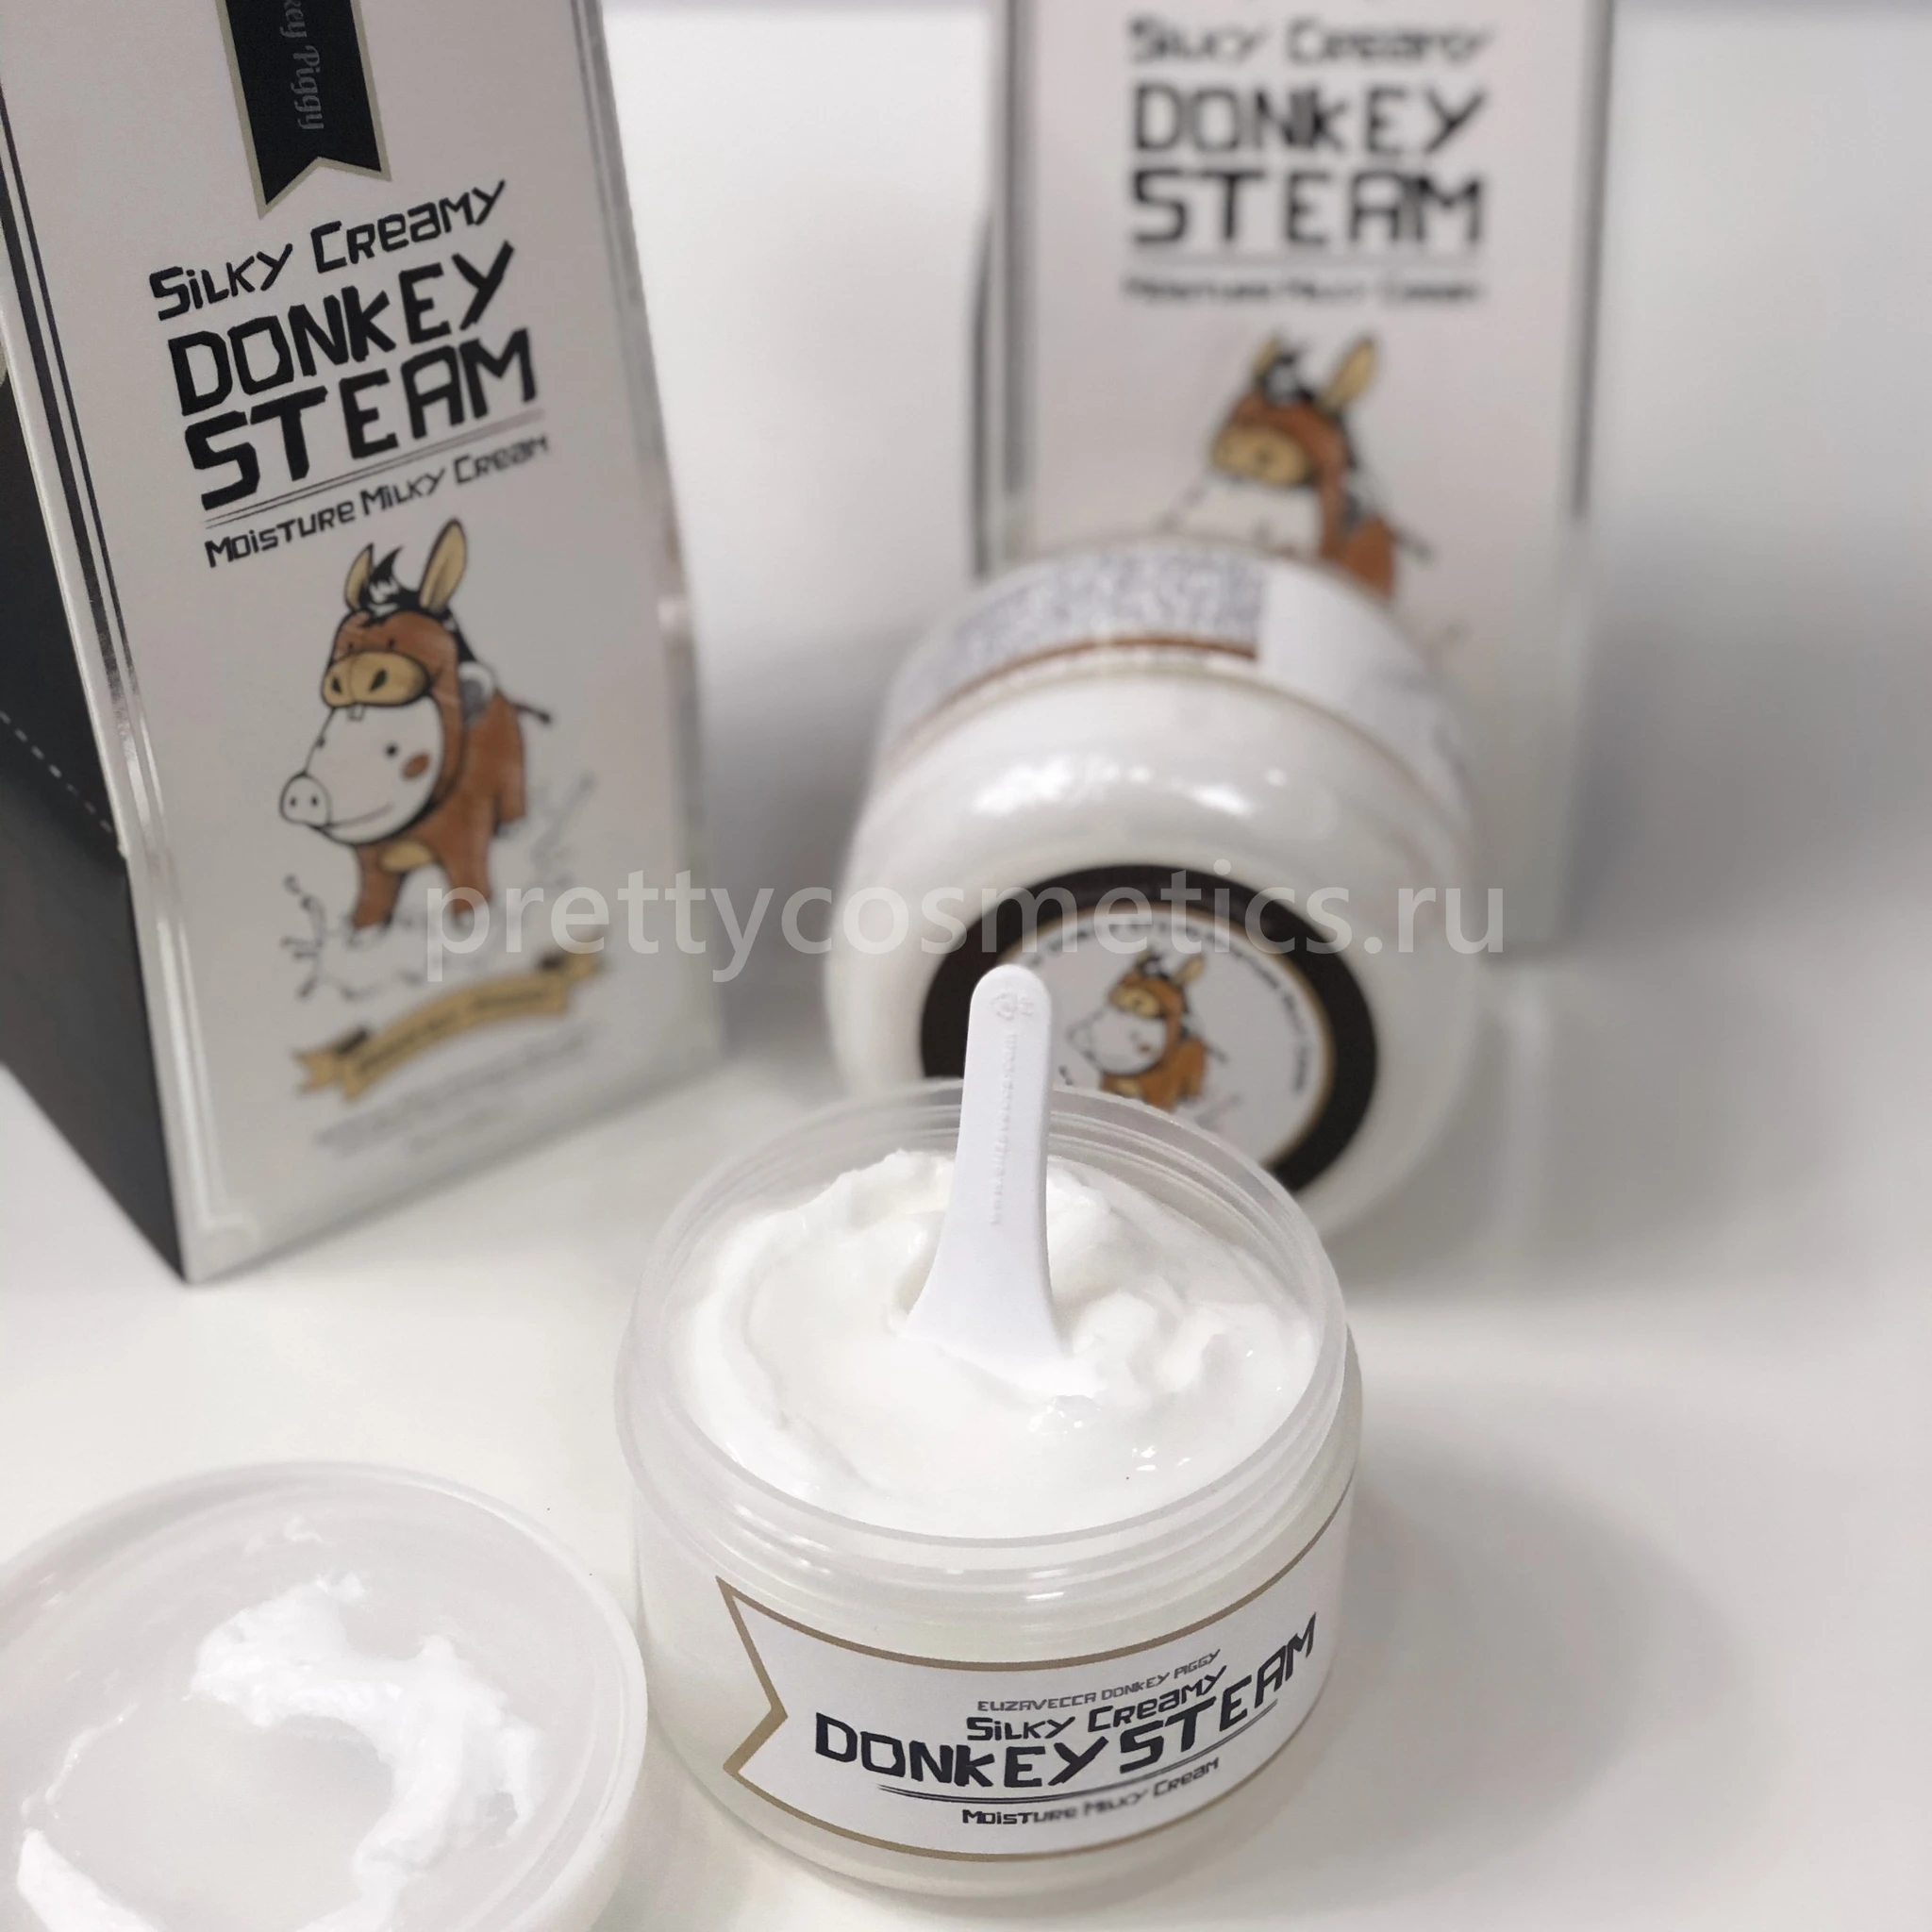 Silky cream donkey steam moisture milky cream фото 32